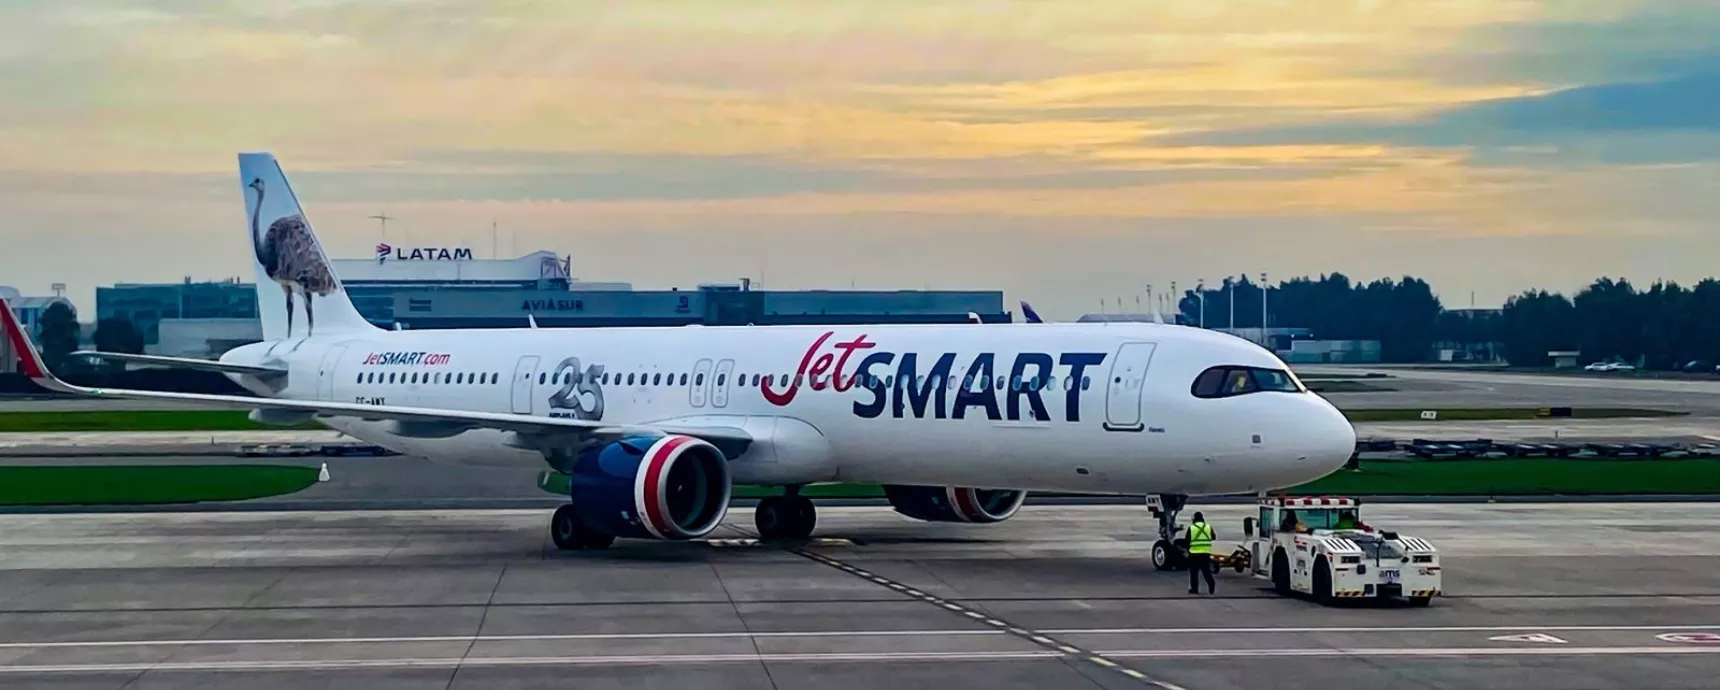 JetSMART llega a Santa Catarina